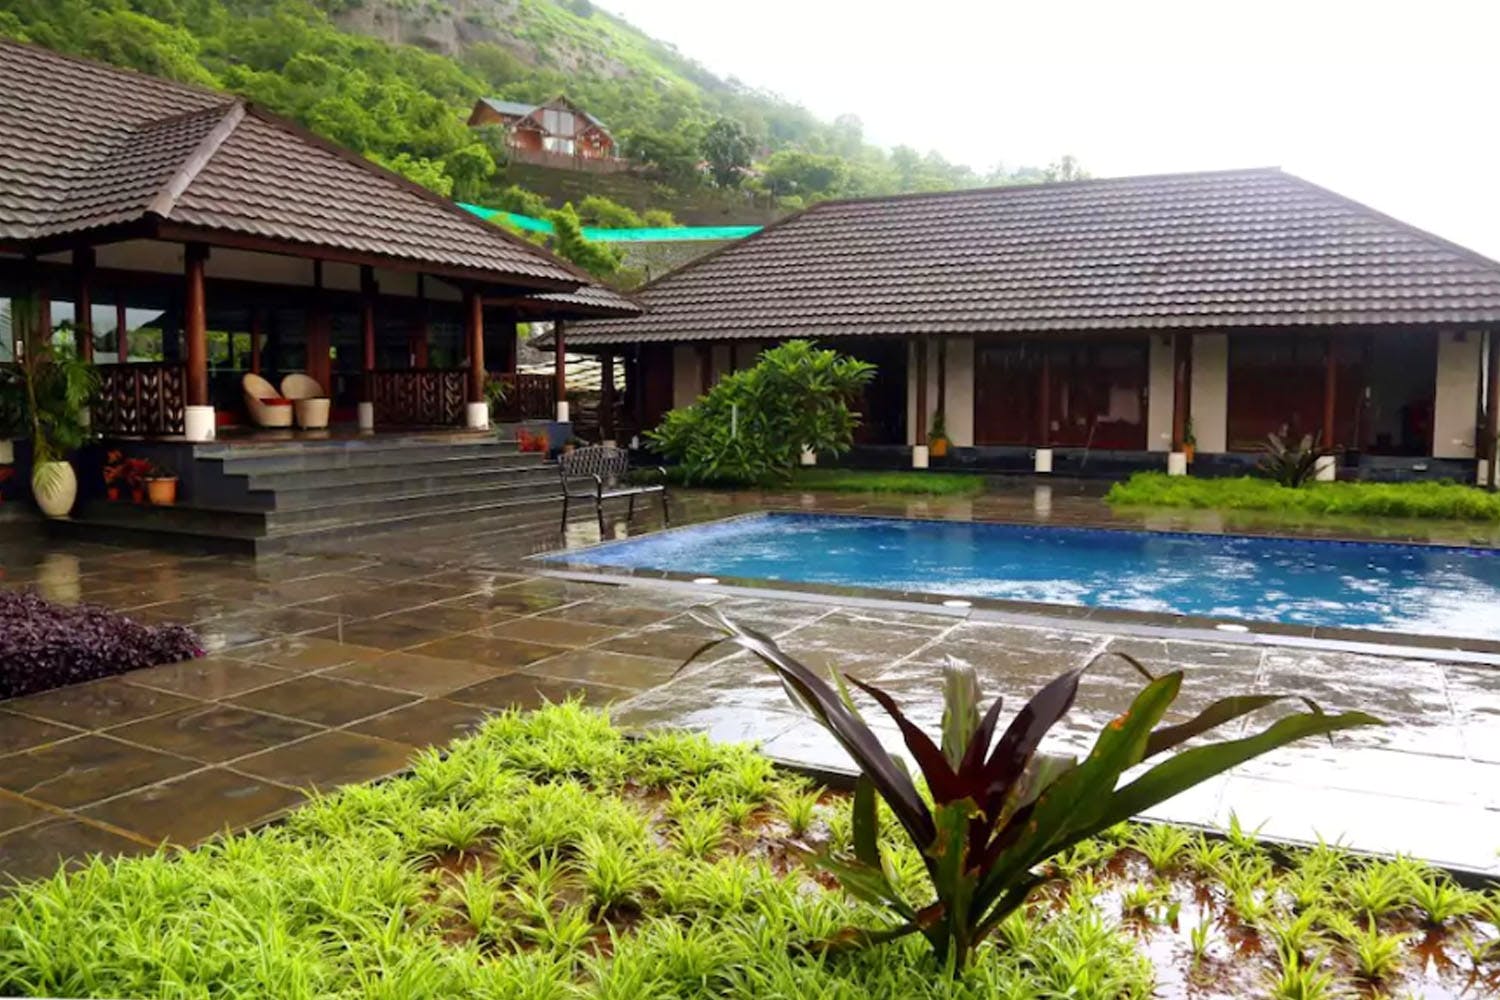 A Bali-Style Resort In Lonavala In A Valley | LBB Mumbai